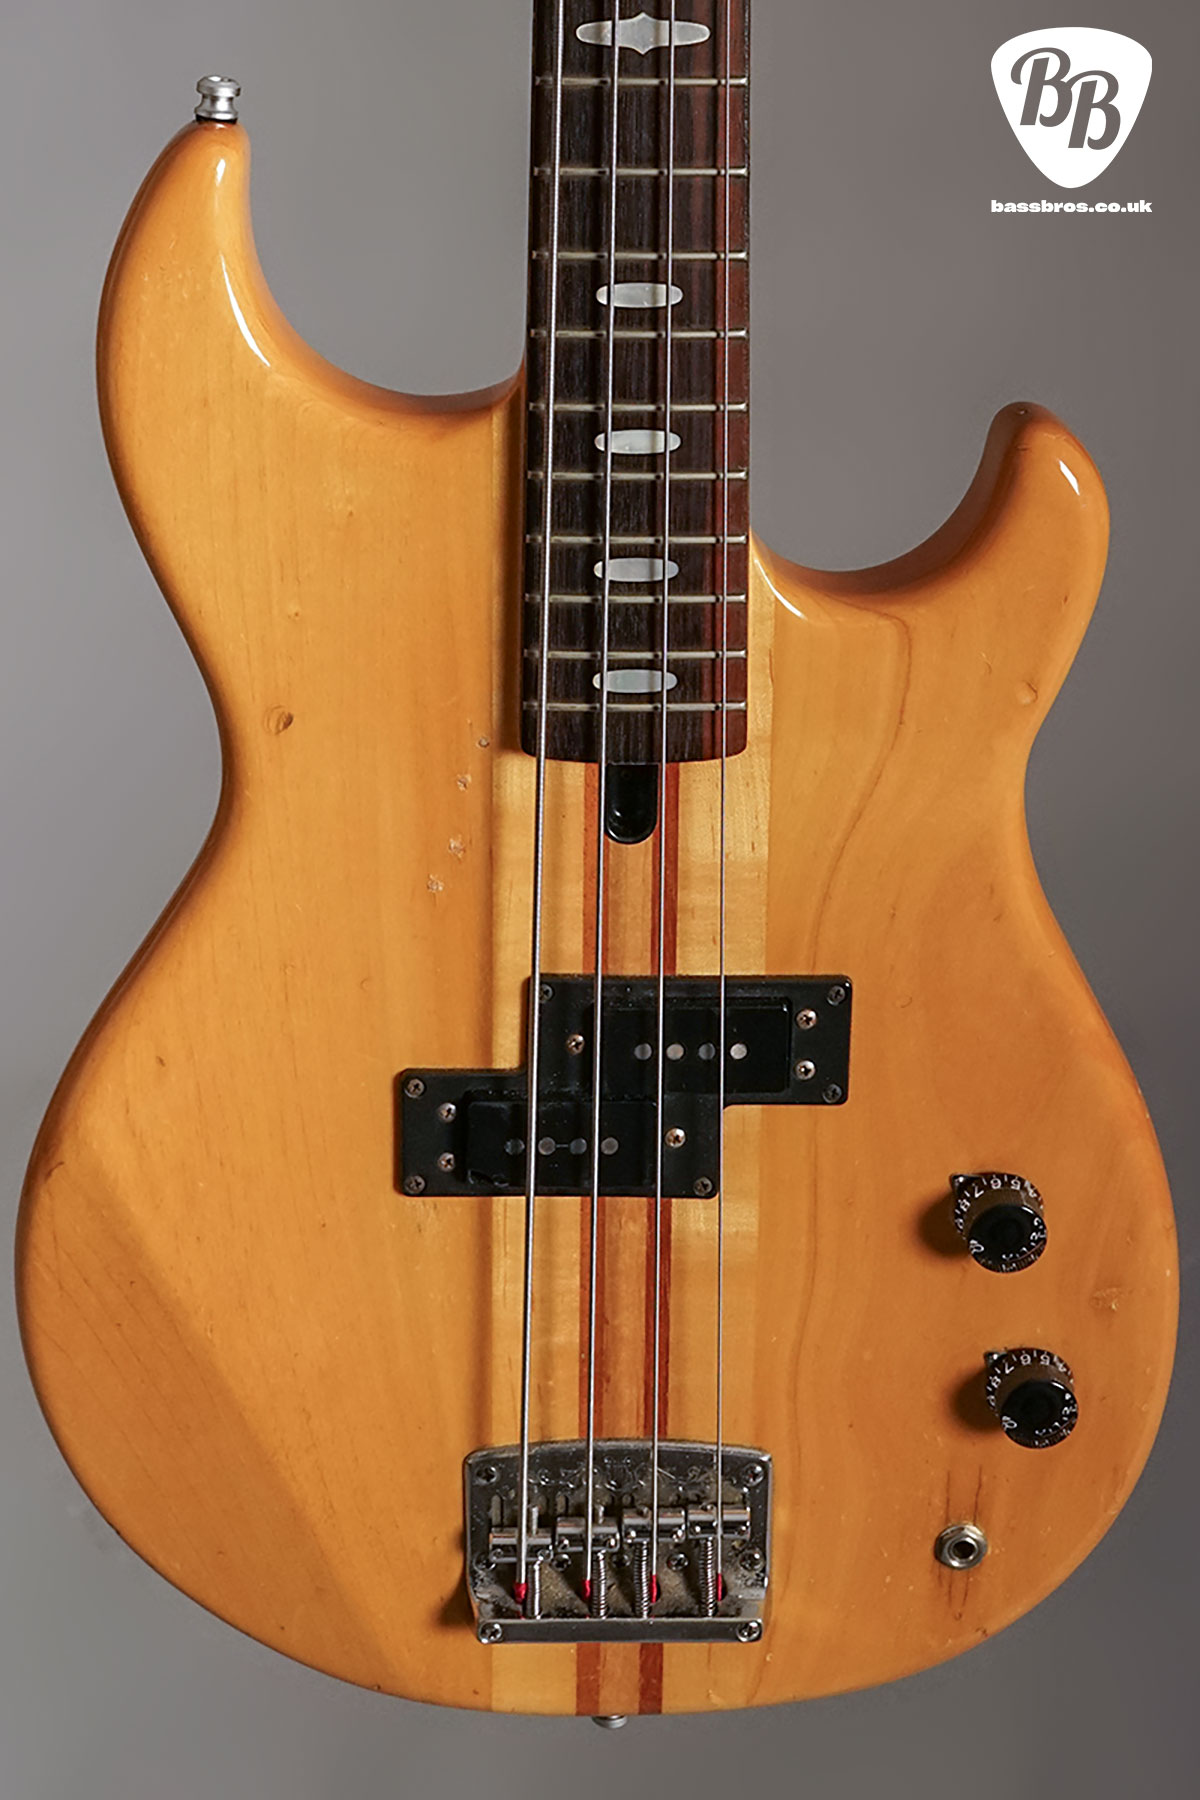 1981 Yamaha Broad Bass BB1200 | BassBros